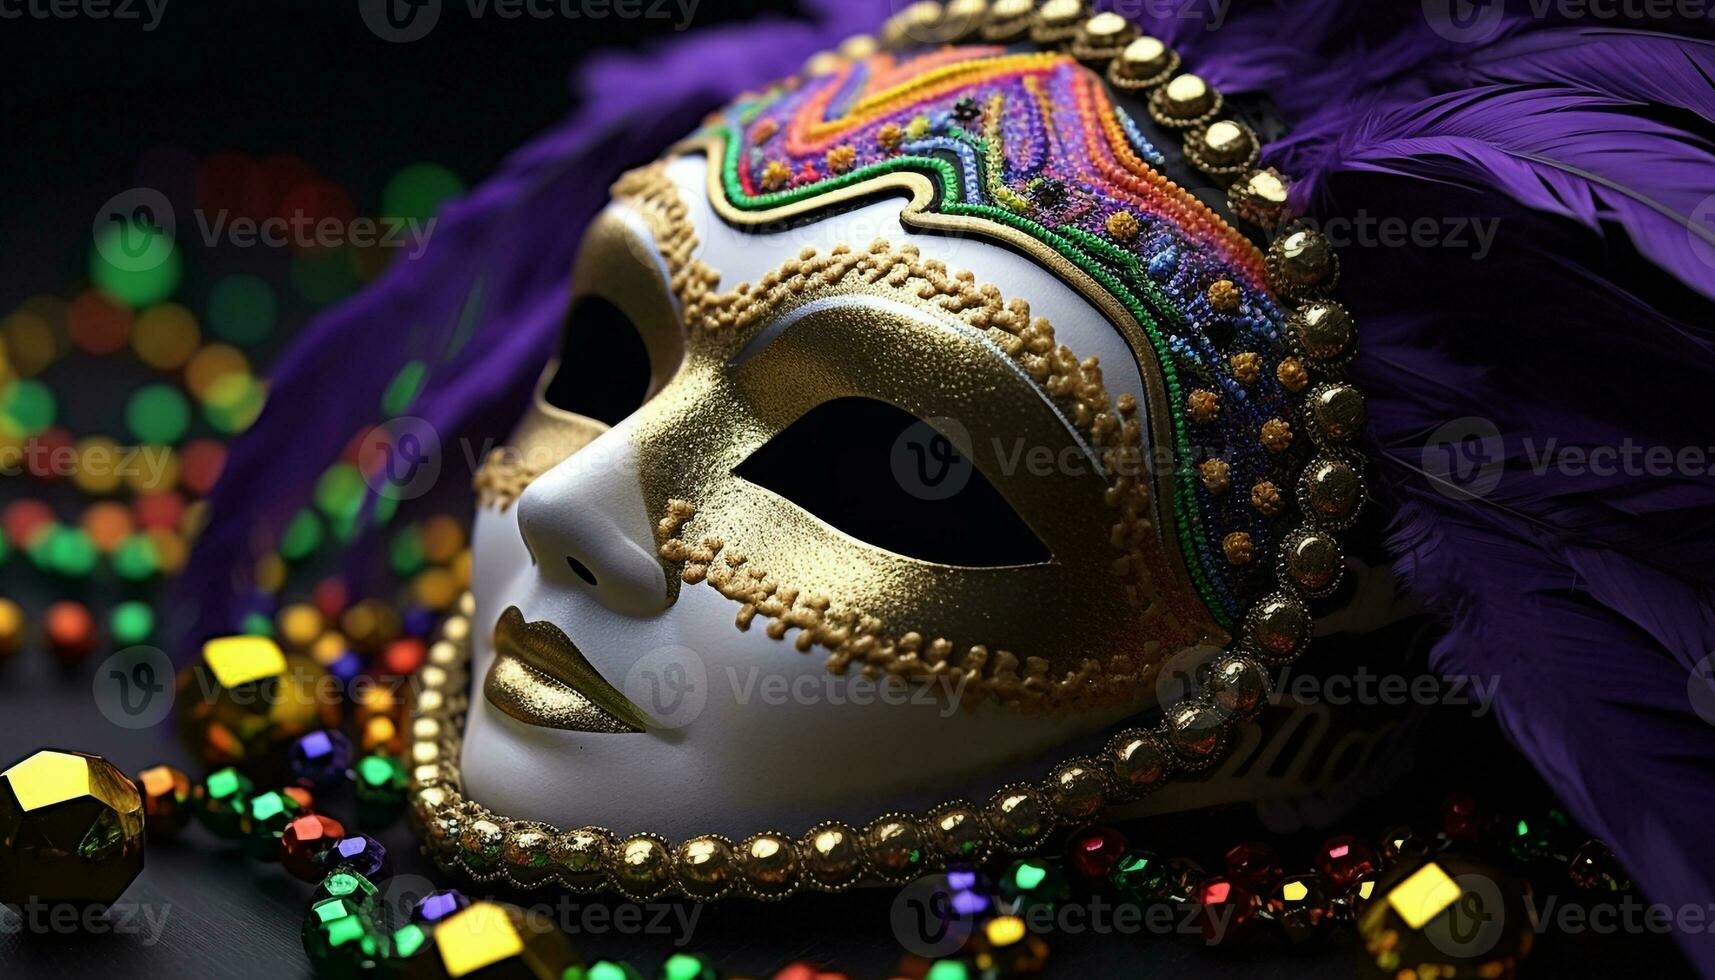 AI generated Masked celebration, vibrant colors, ornate costume, shiny gold generated by AI photo